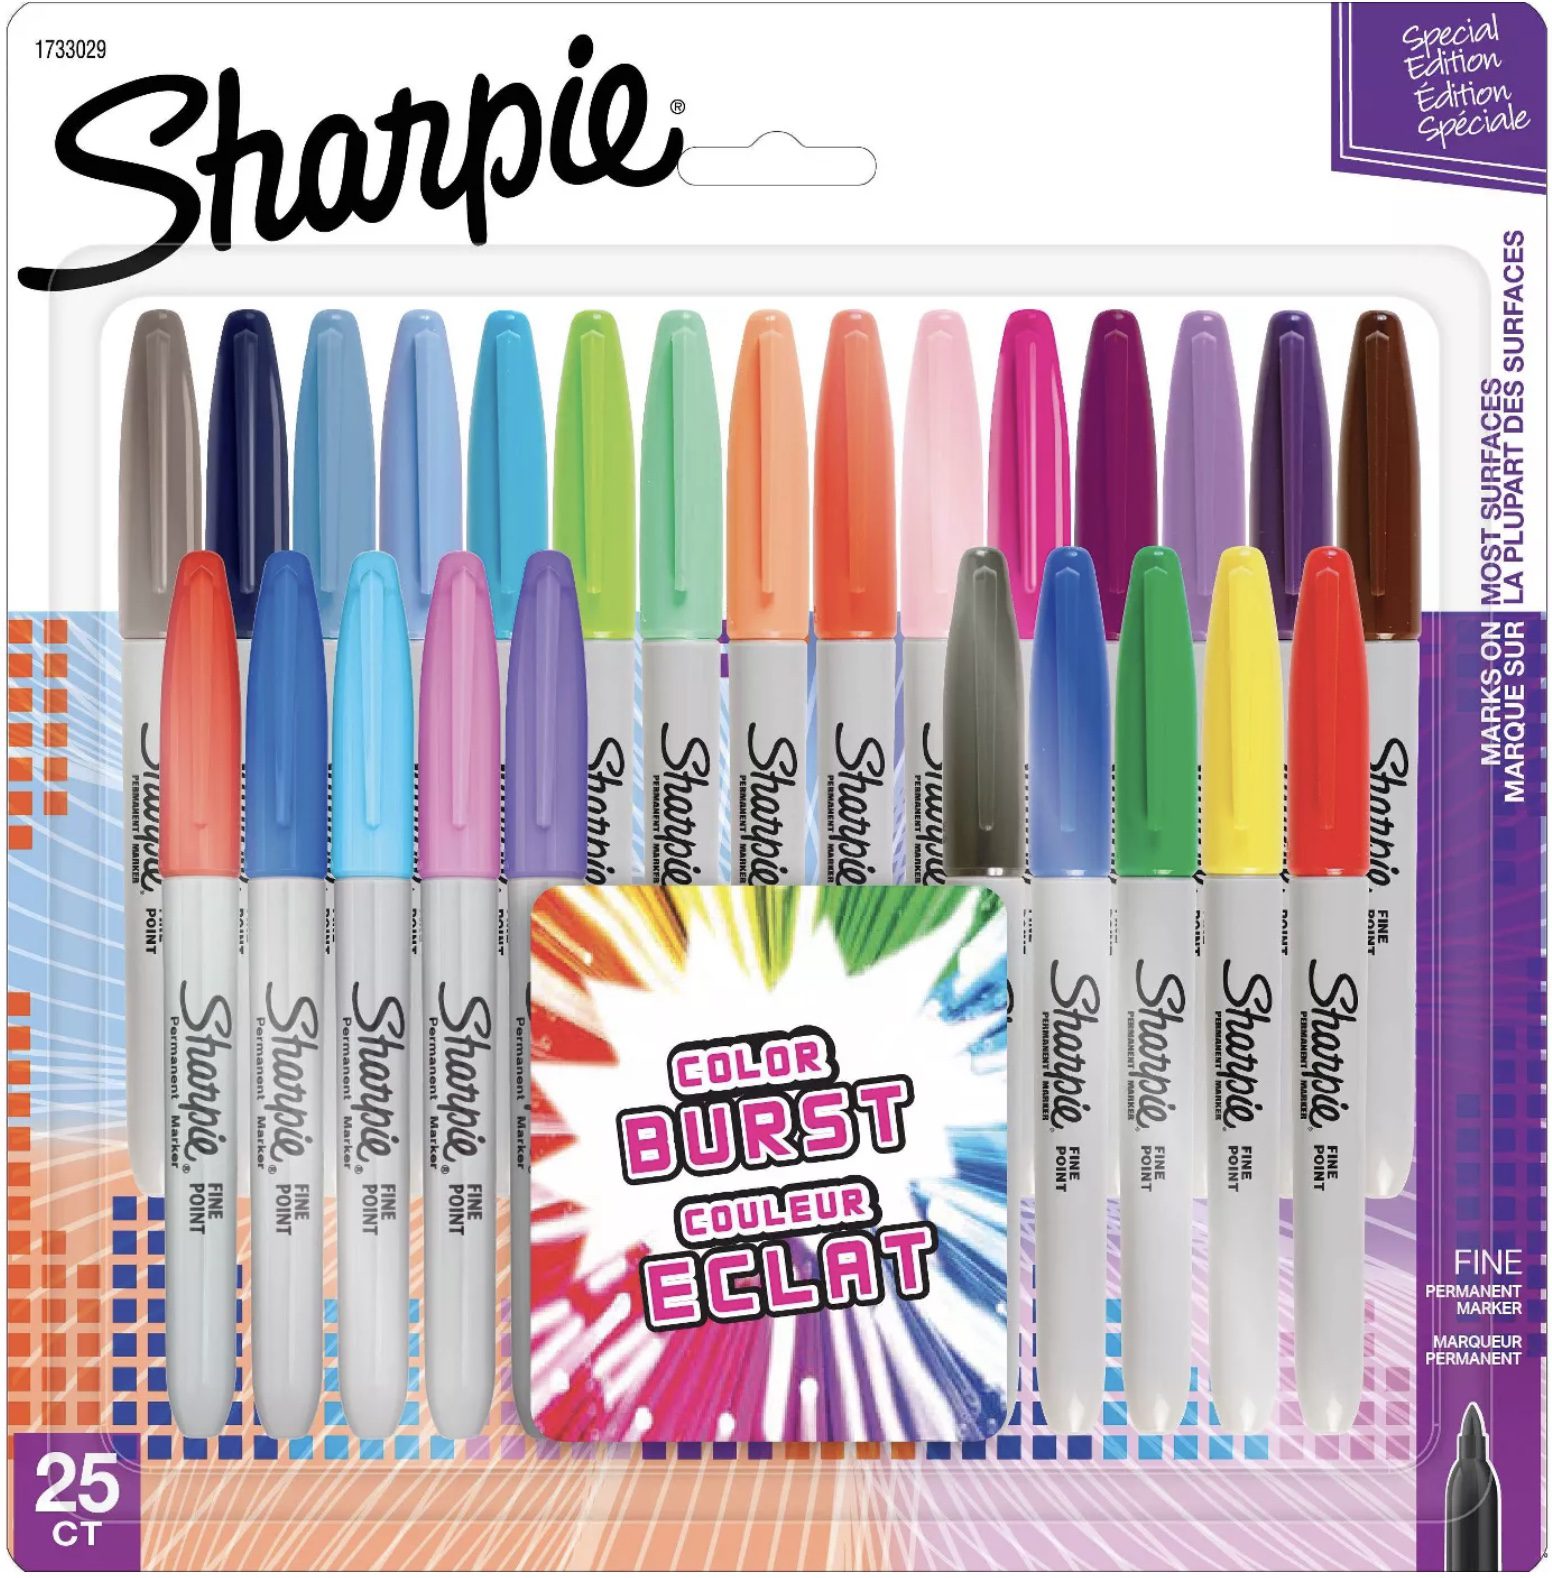 Sharpie Fine Tip Multicolored Permanent Markers